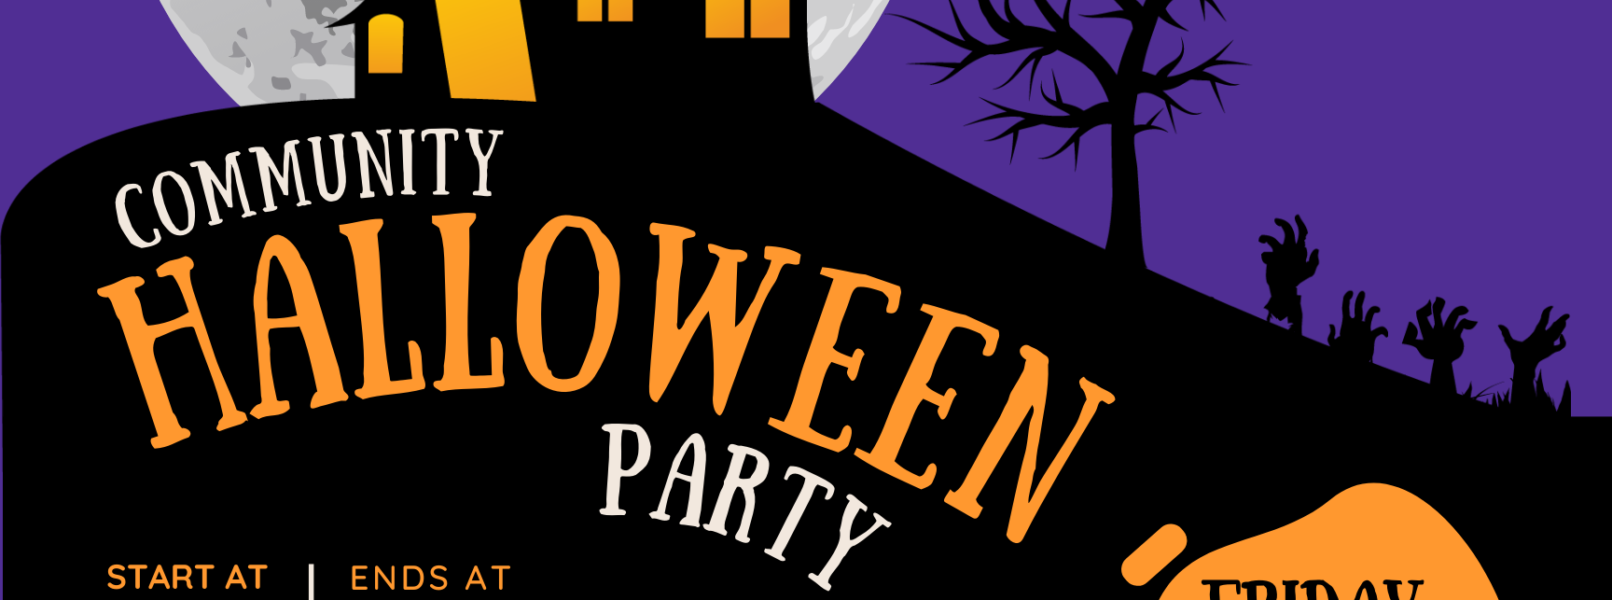 Community Halloween party flyer